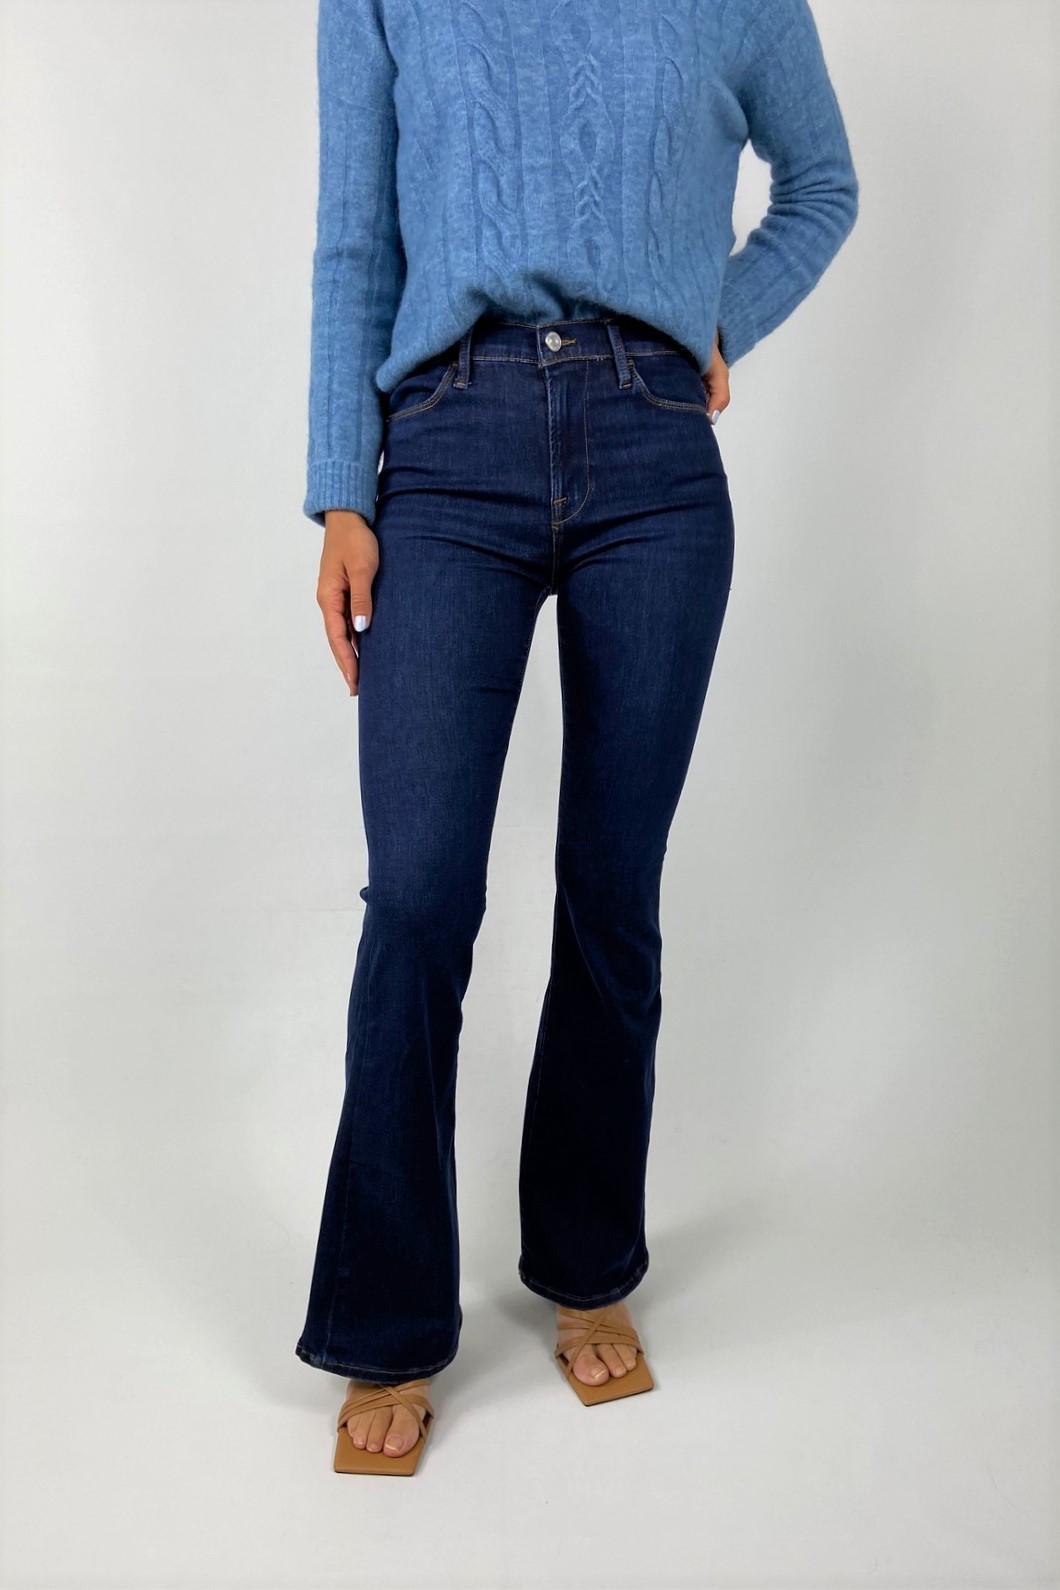 Jeans le high flare in de kleur donkerblauw van het merk Frame